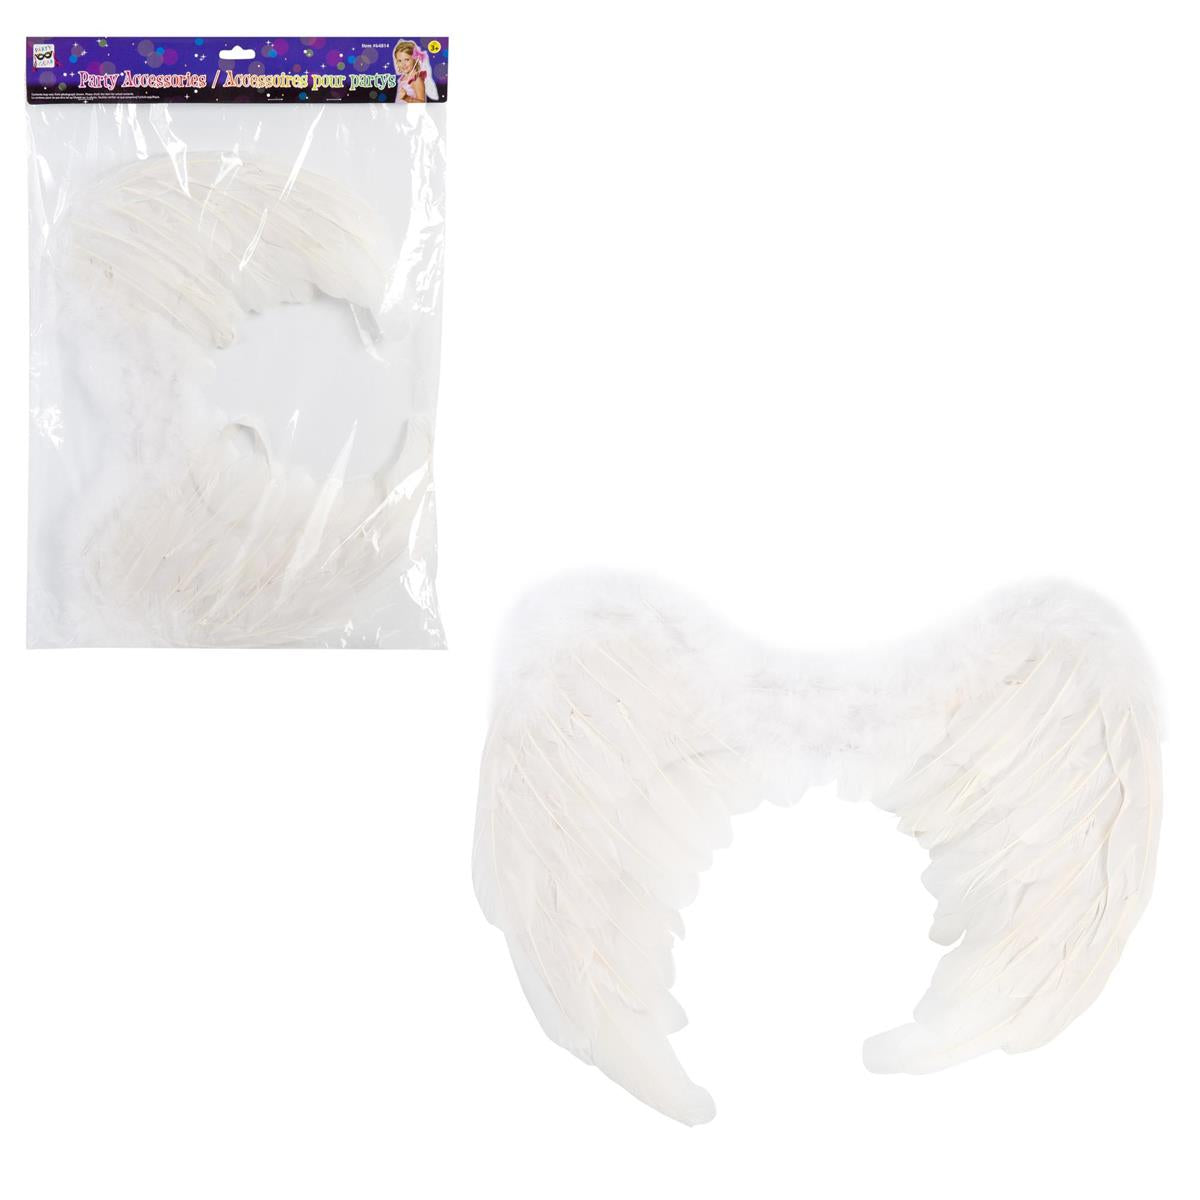 Party Gear Angel Wings Costume, 17.5"x13"